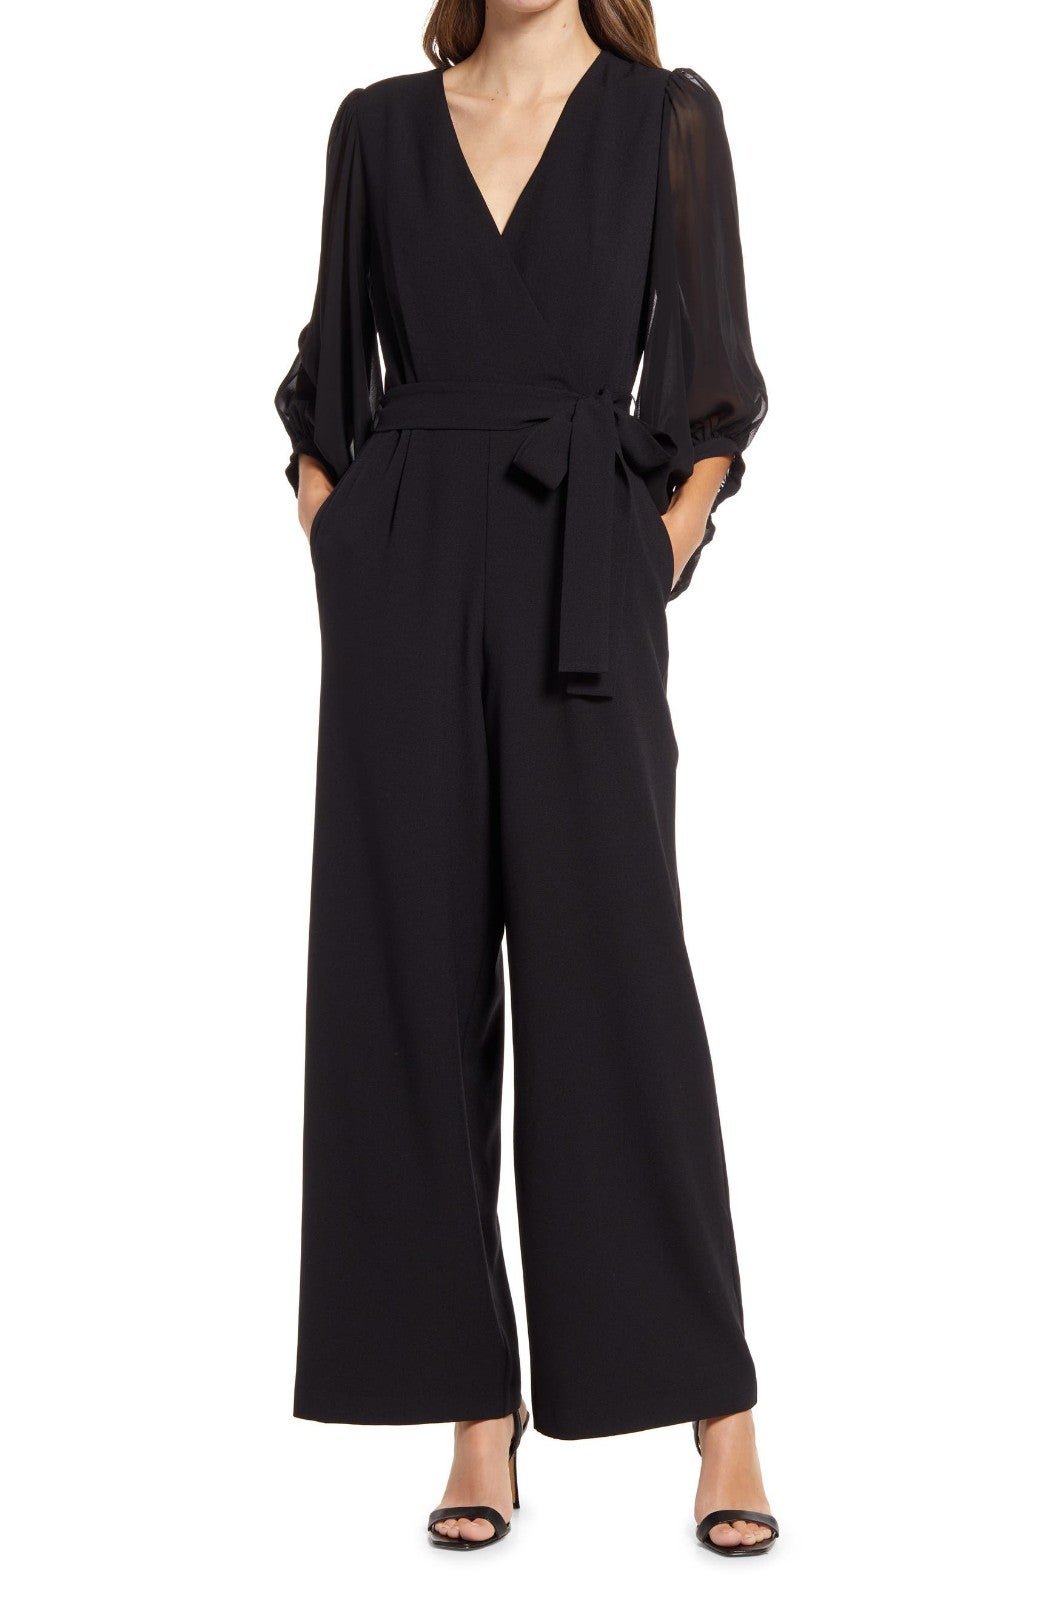 Fashion NWT Long Sleeve Wrap Jumpsuit

Long Sleeve Wrap Jumpsuit
DONNA RICCO

Size 6 K384R6qJz Online Exclusive